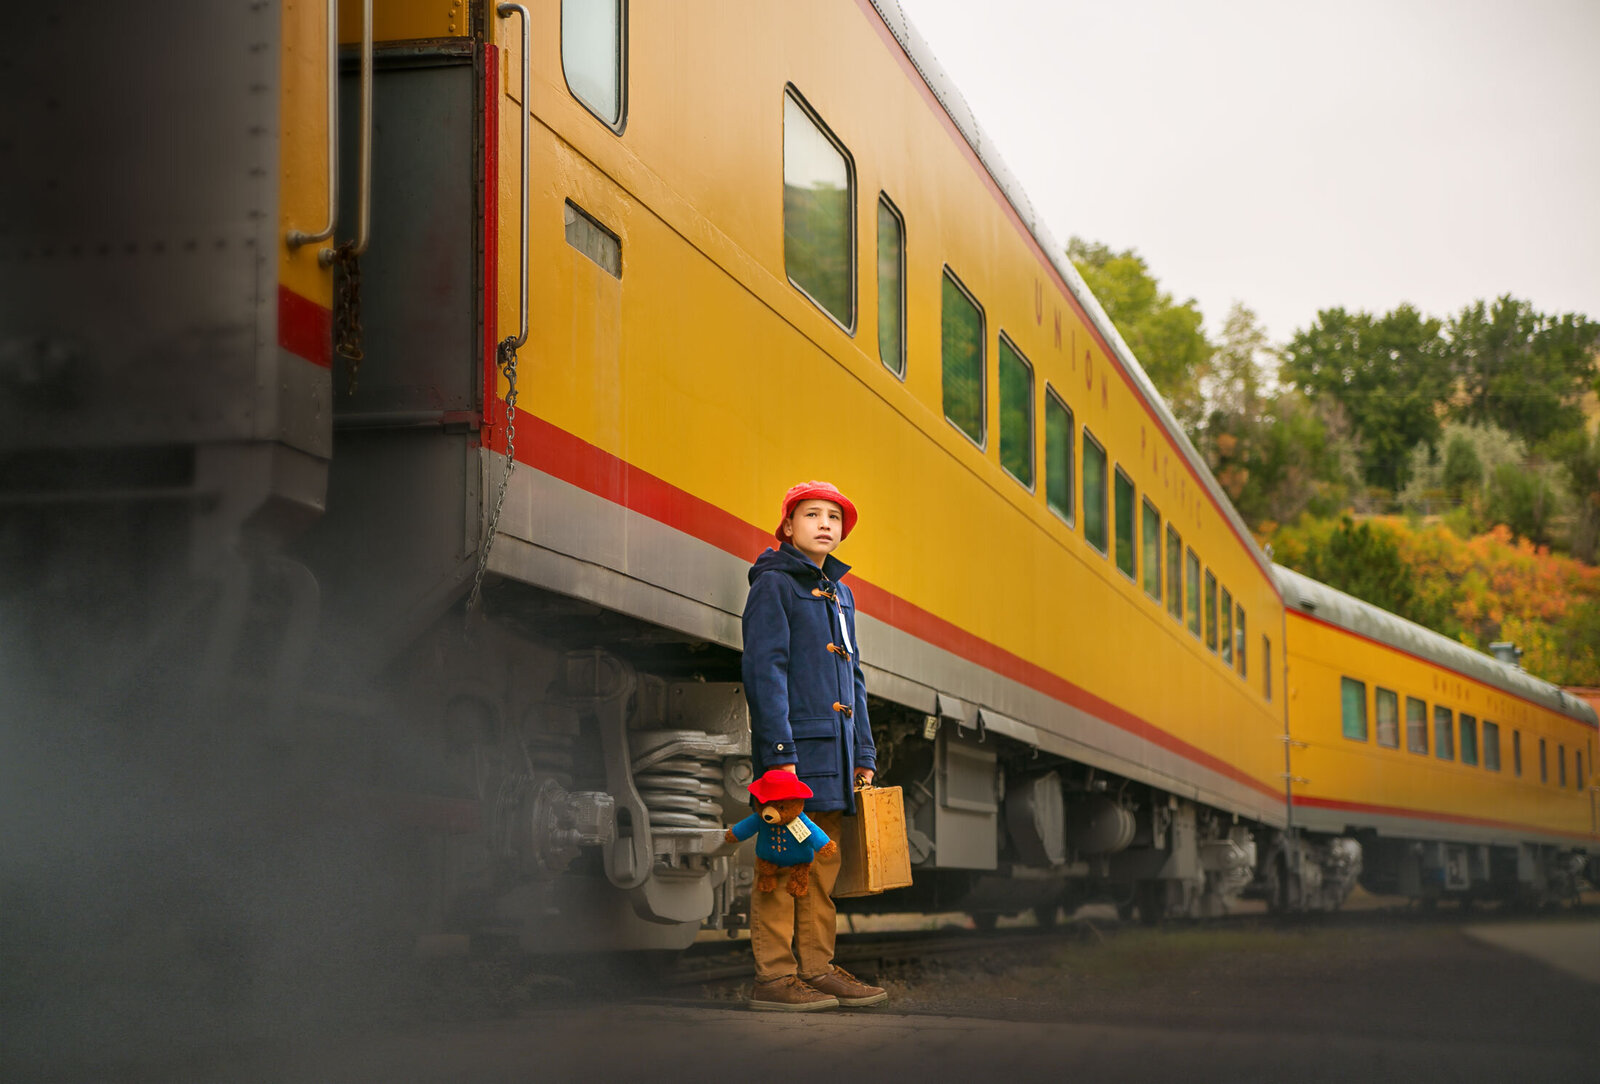 colorado-train-museum-paddington-bear-historic-vintage-children-portrait-yellow-children-book-bear